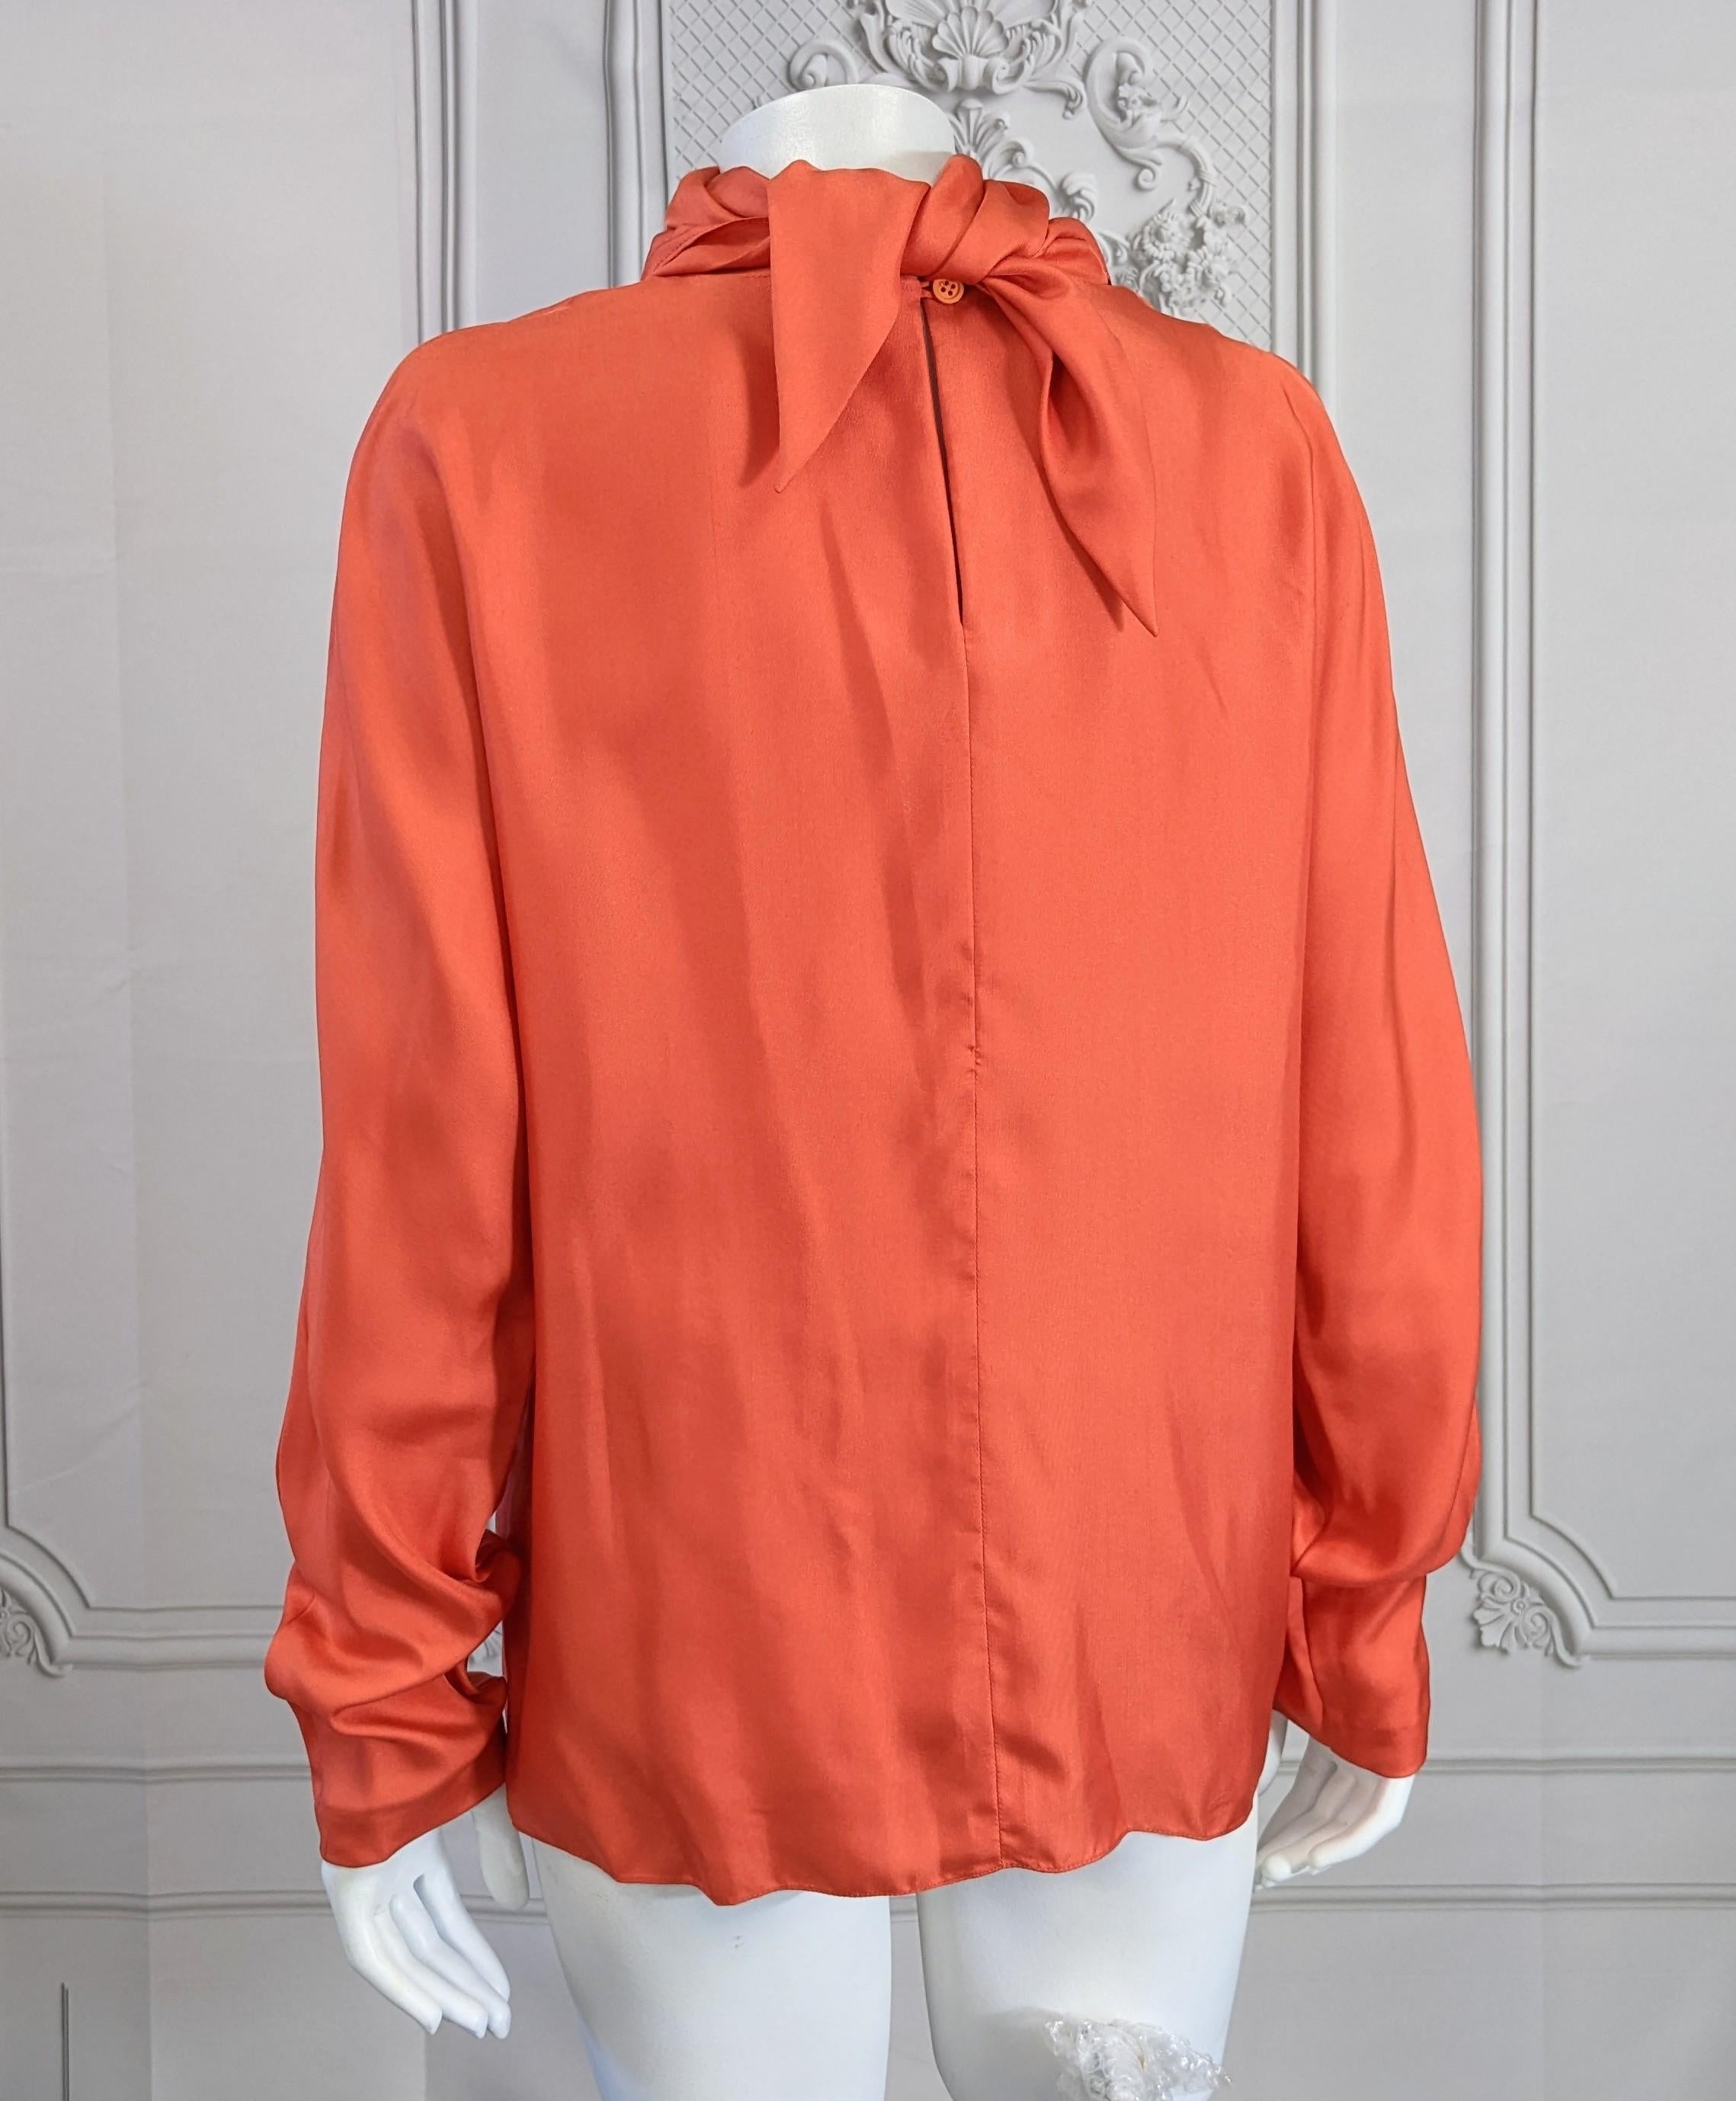 Women's or Men's Stephen Sprouse Orange Silk Twill Kerchief Blouse For Sale